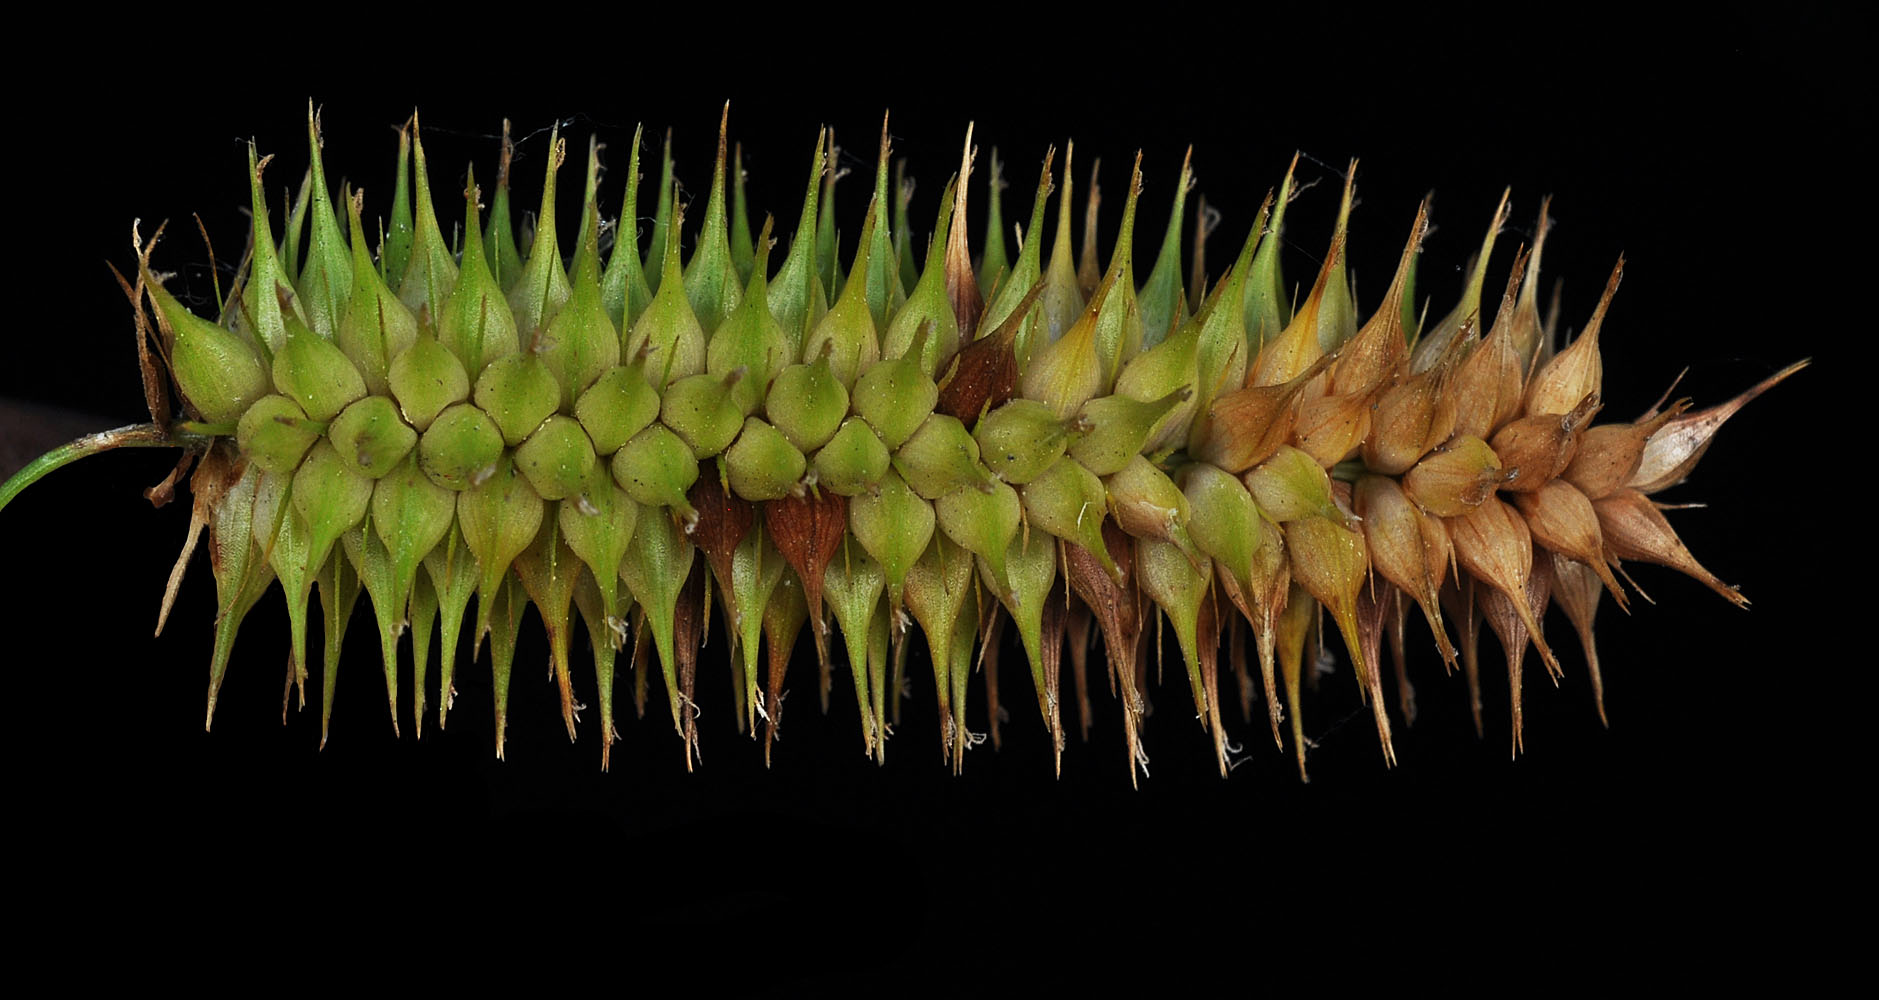 Flora of Eastern Washington Image: Carex hystericina